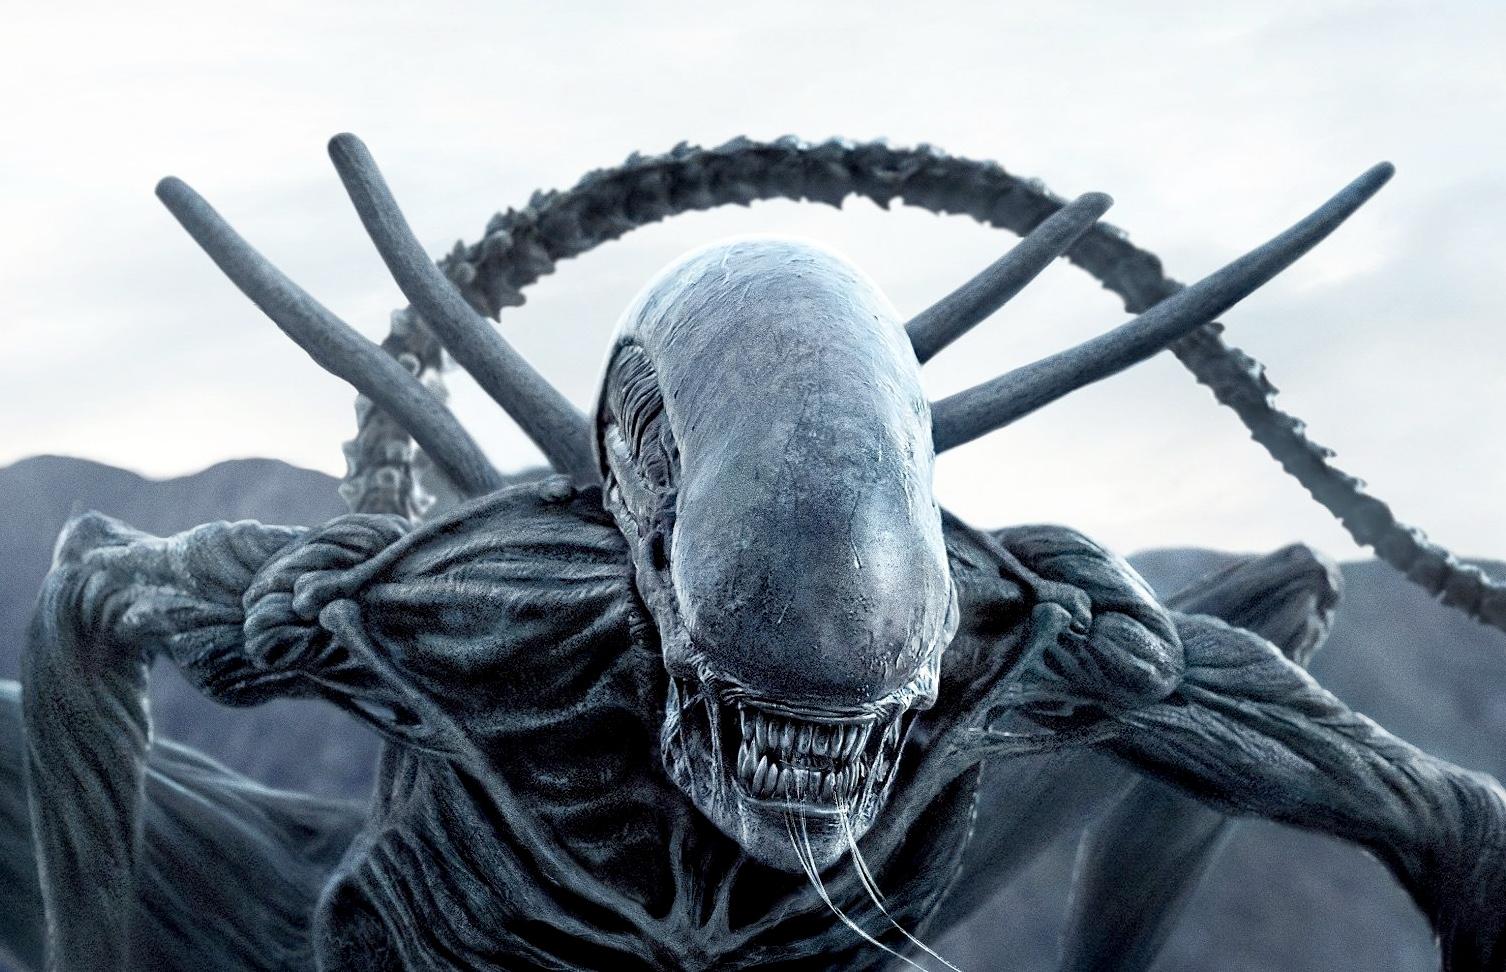 Xenomorph from the Alien film series Courtesy 20th Century Fox Film Distributors